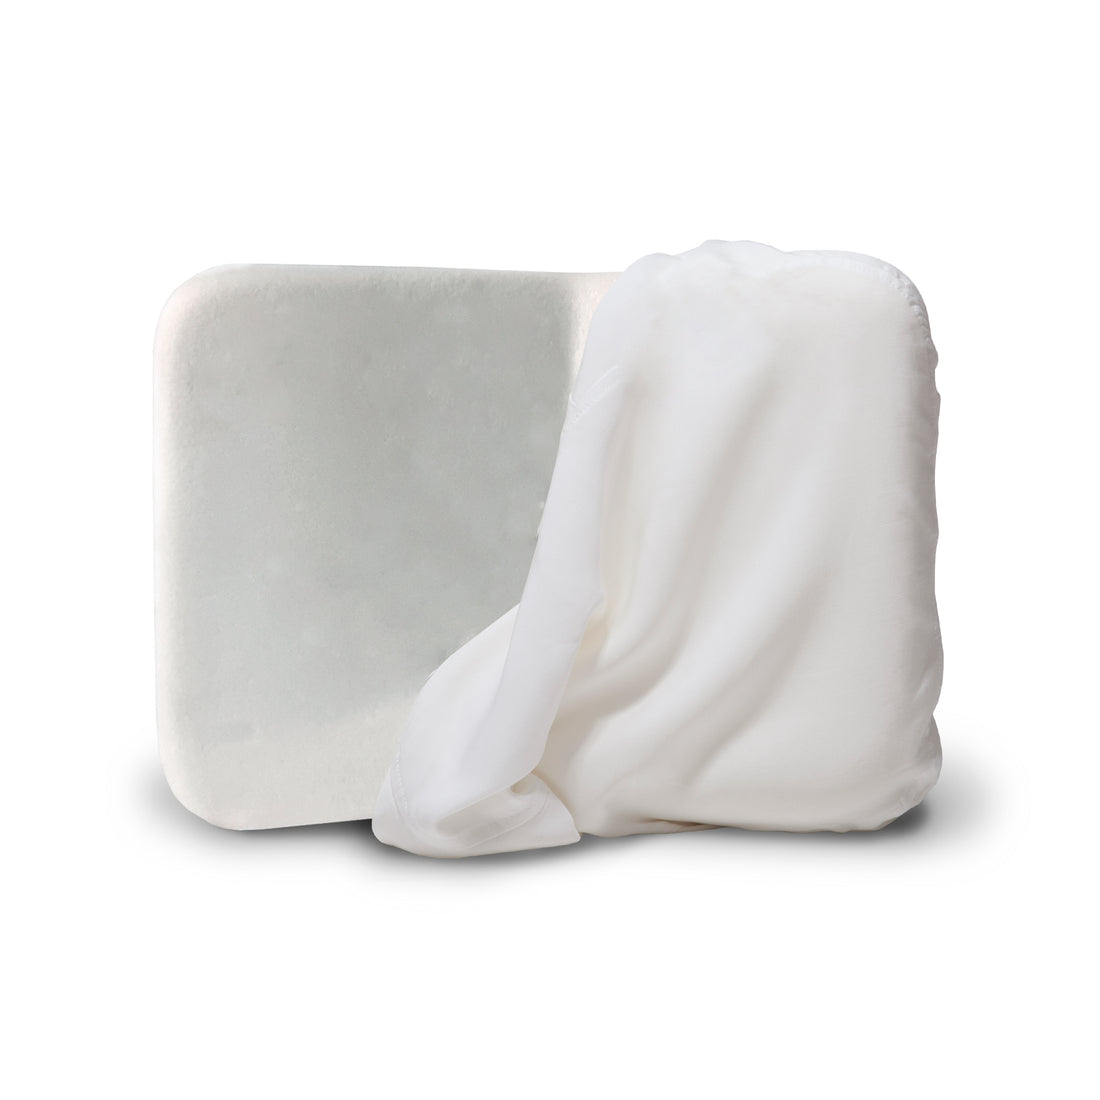 The enVy 100% Natural Latex enVy® Pillow For Kids - enVy Pillow